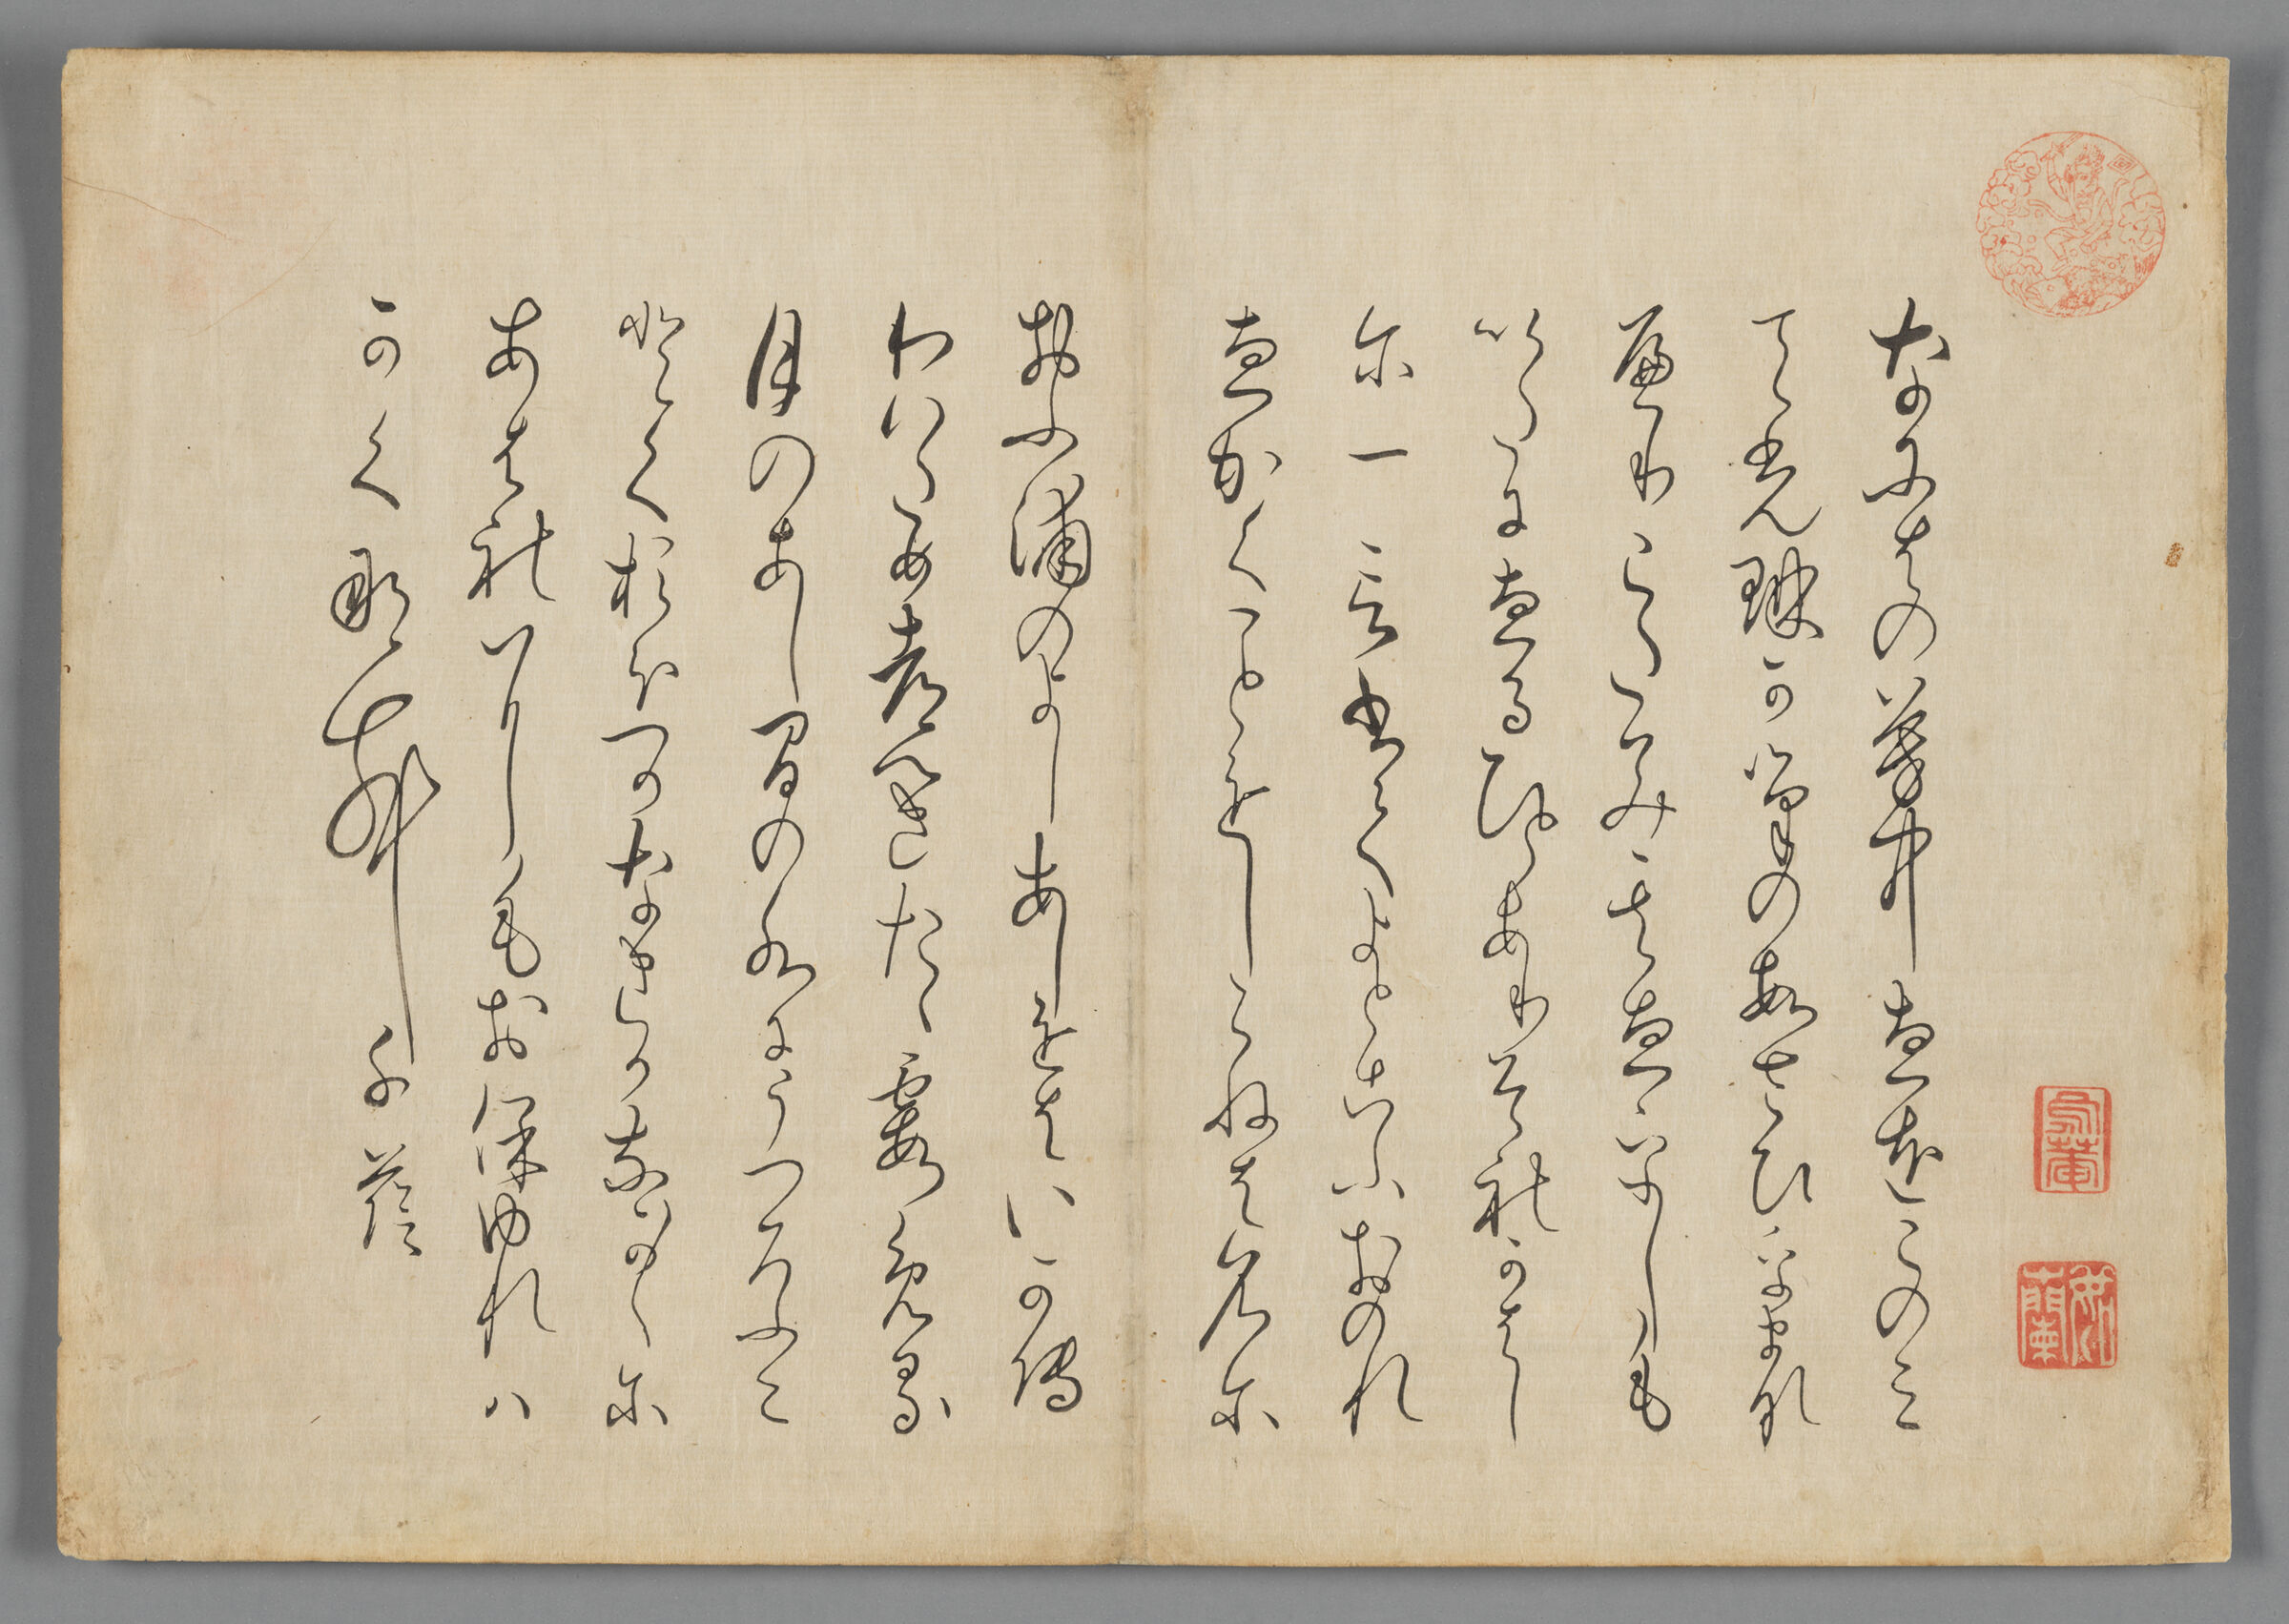 Preface From The Kōrin Gafu (Kōrin Picture Album)